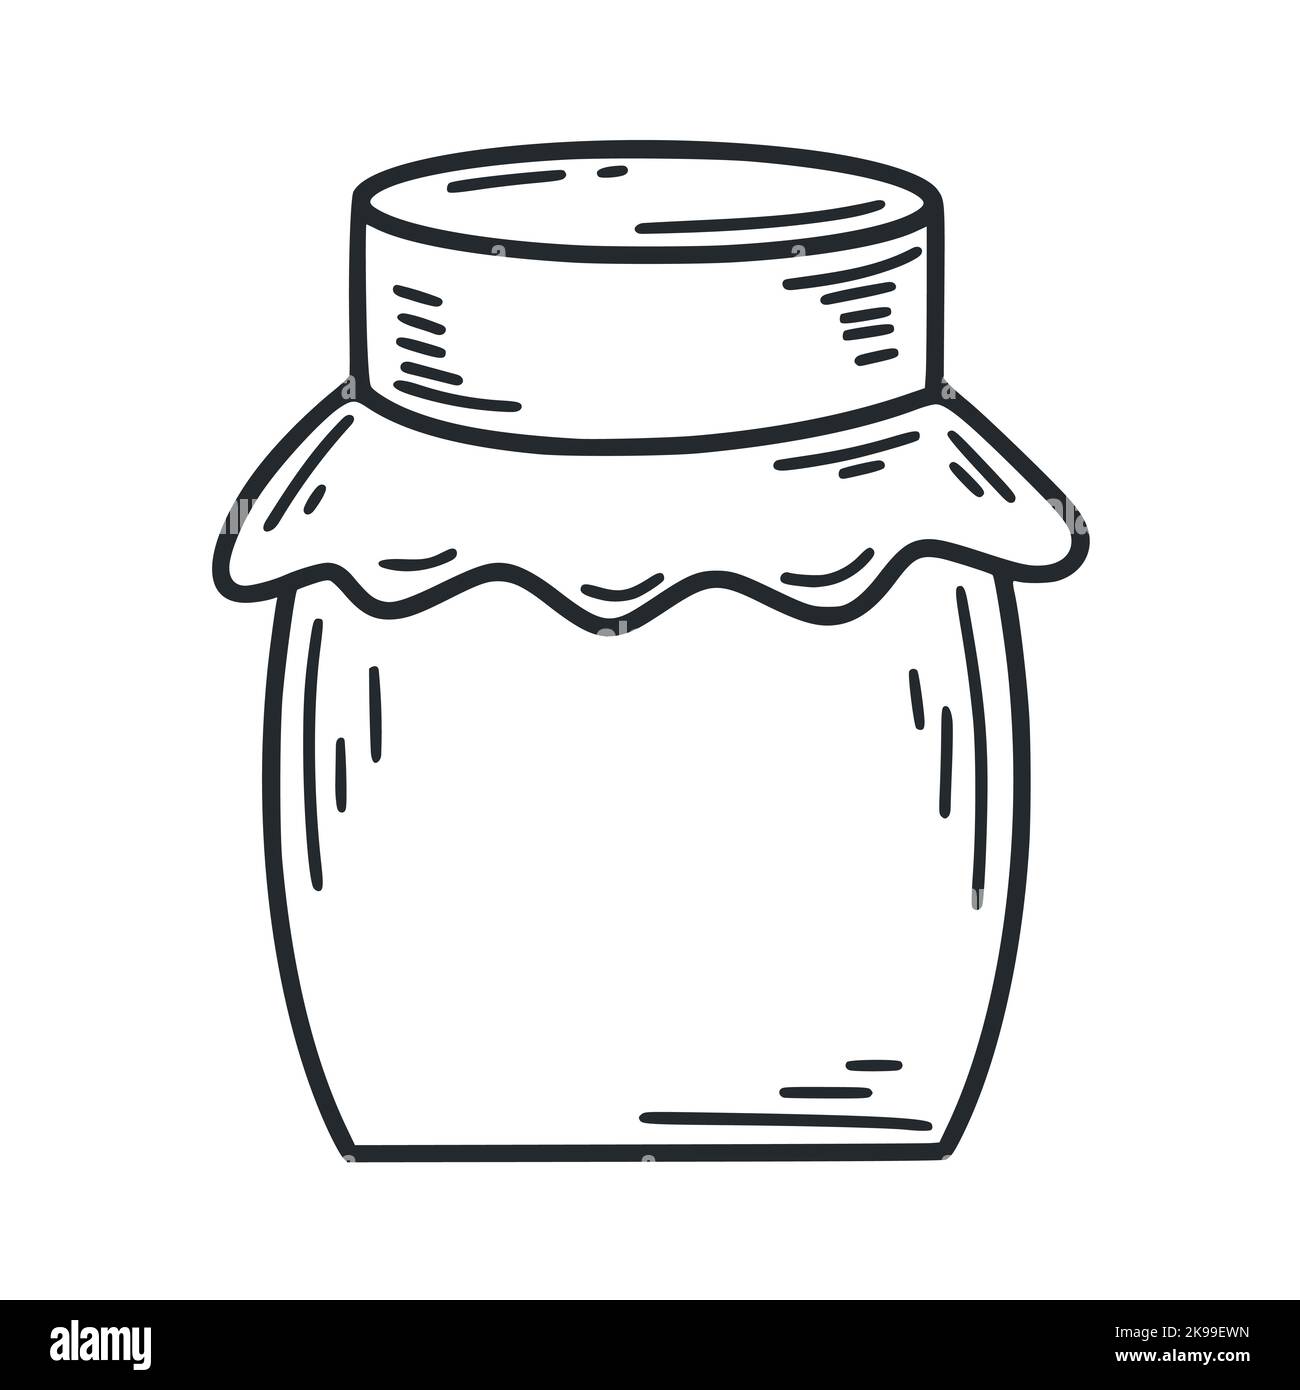 Cute jar of jam or honey doodle illustration Stock Vector